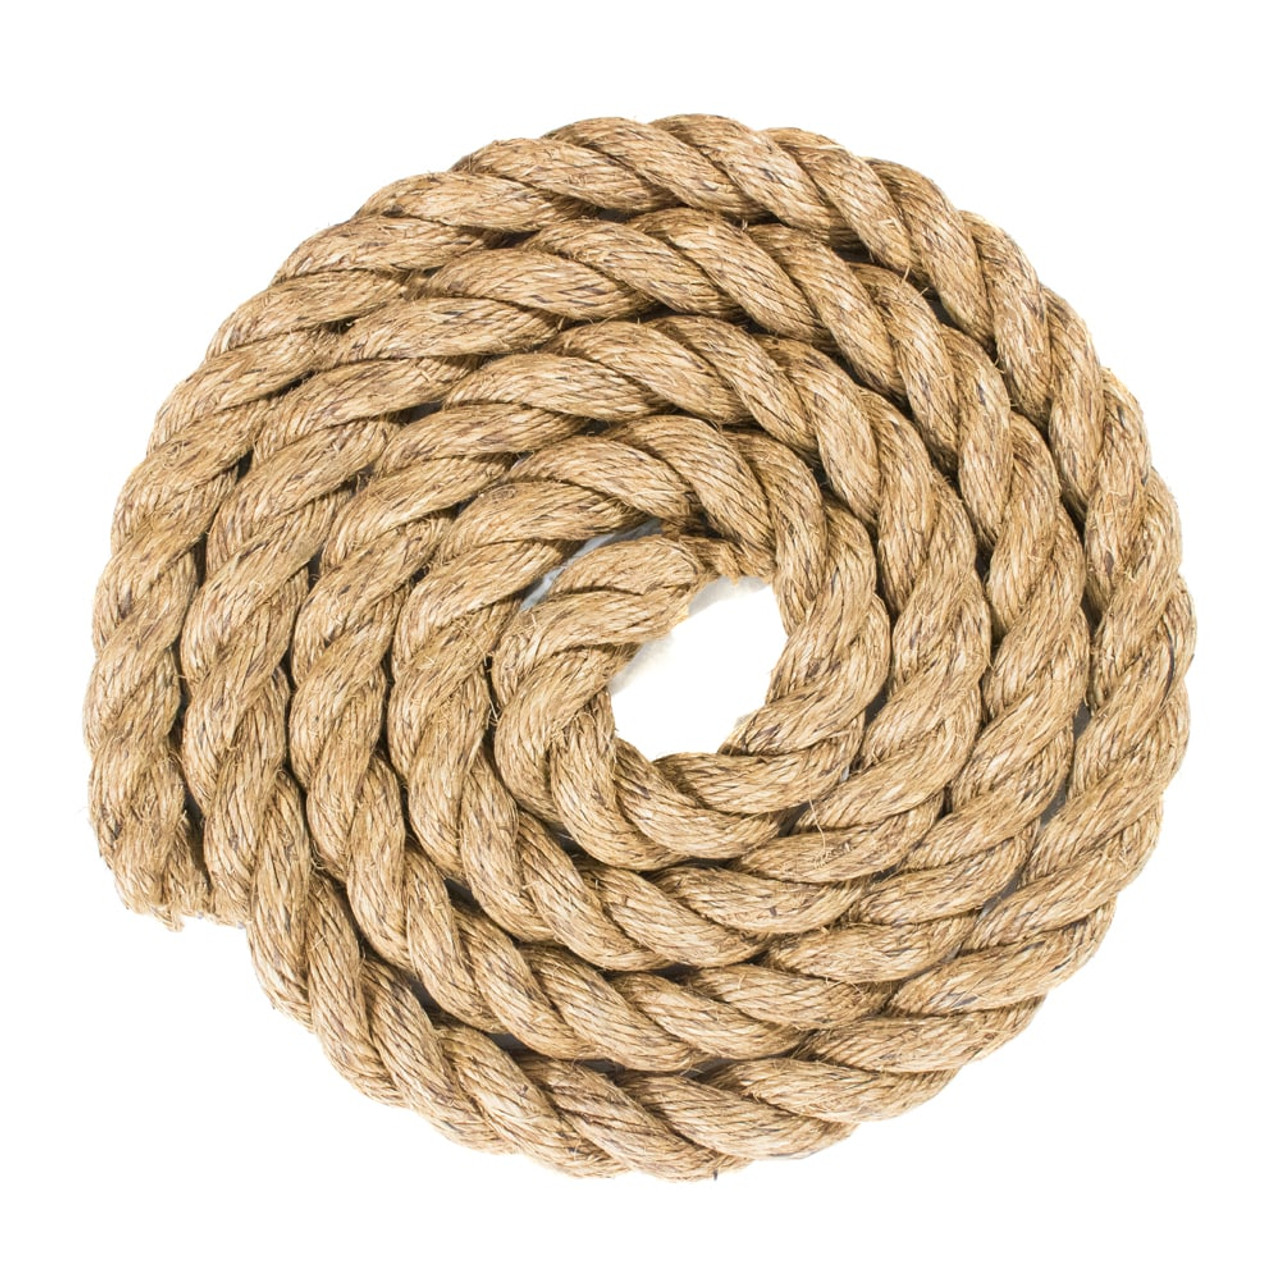 1 1/2 inch Manila Rope - Multiple Lengths